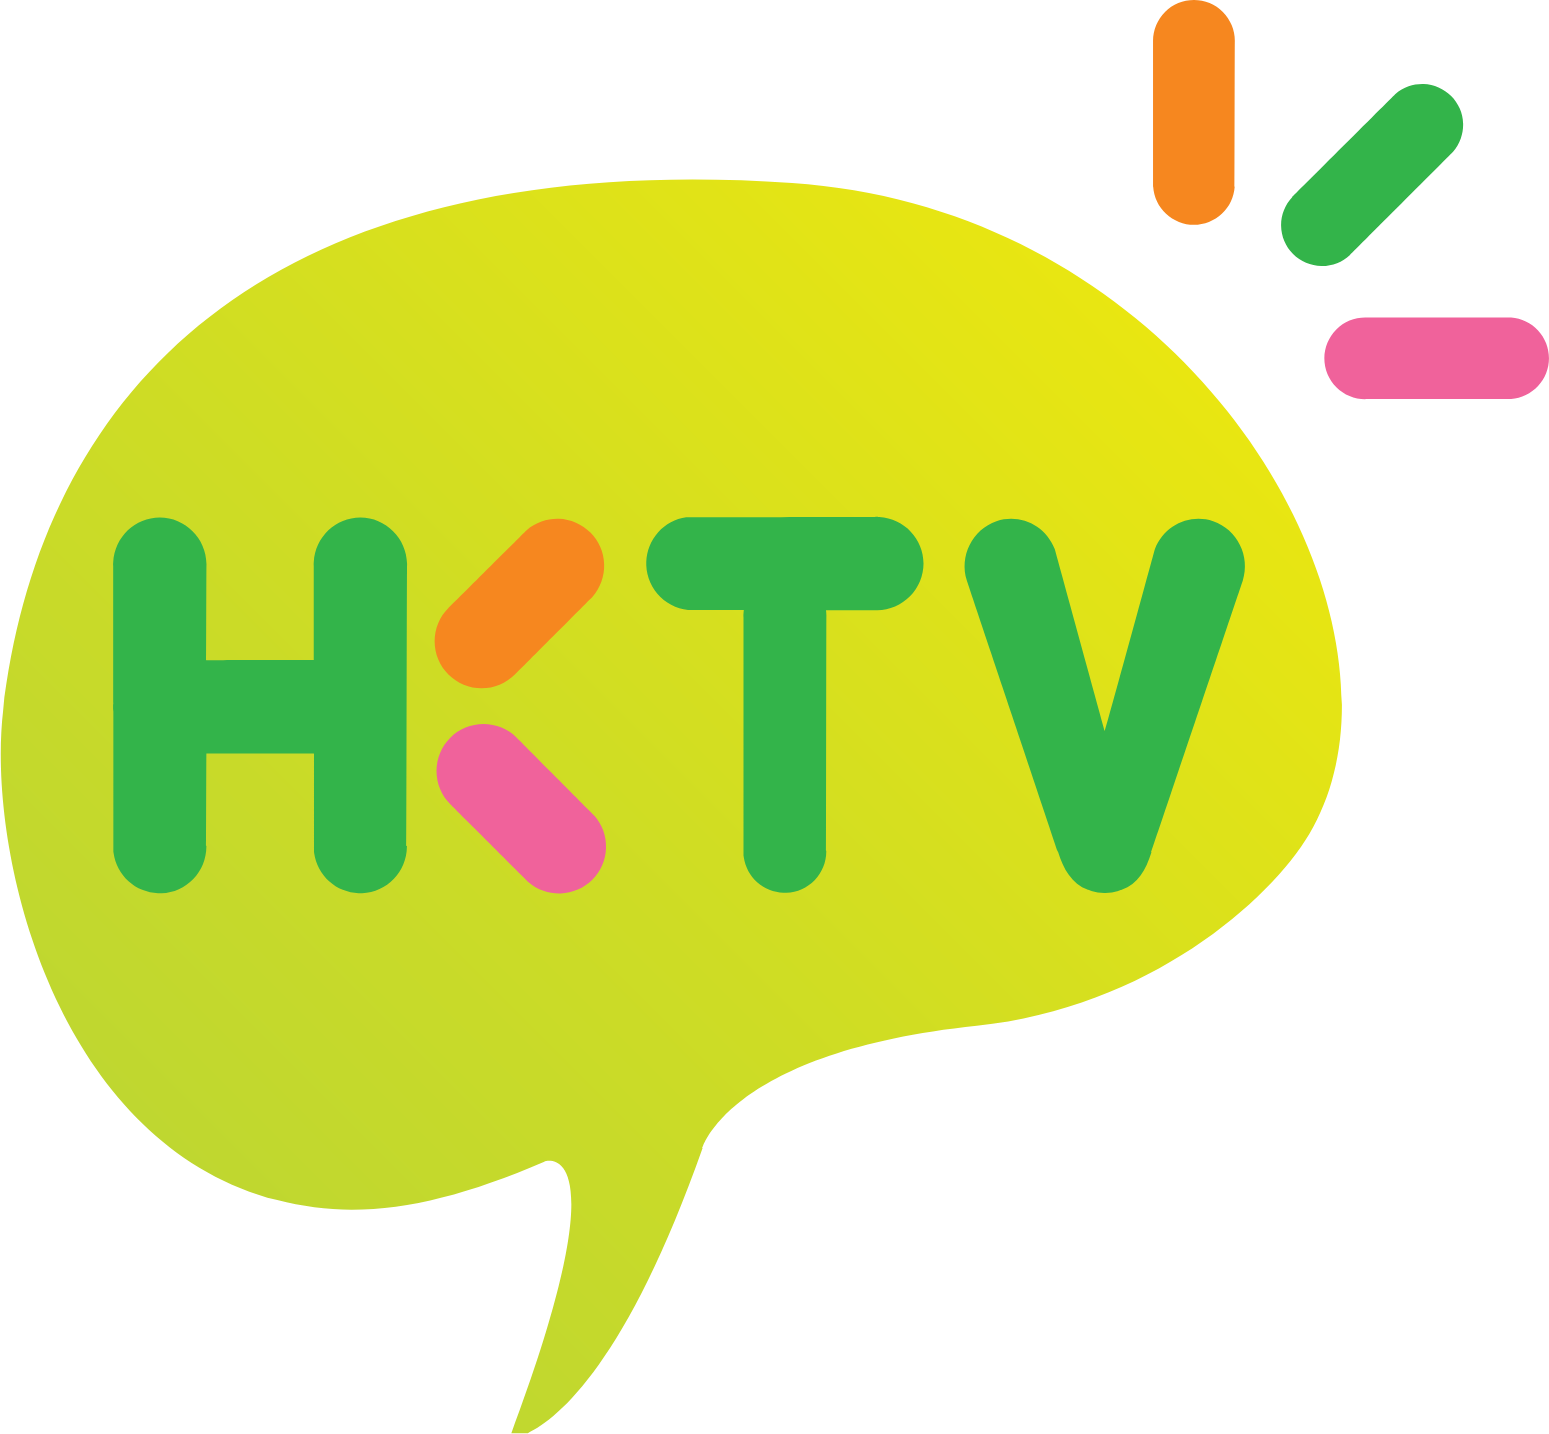 Hong Kong Technology Venture Company (HKTV) logo (PNG transparent)